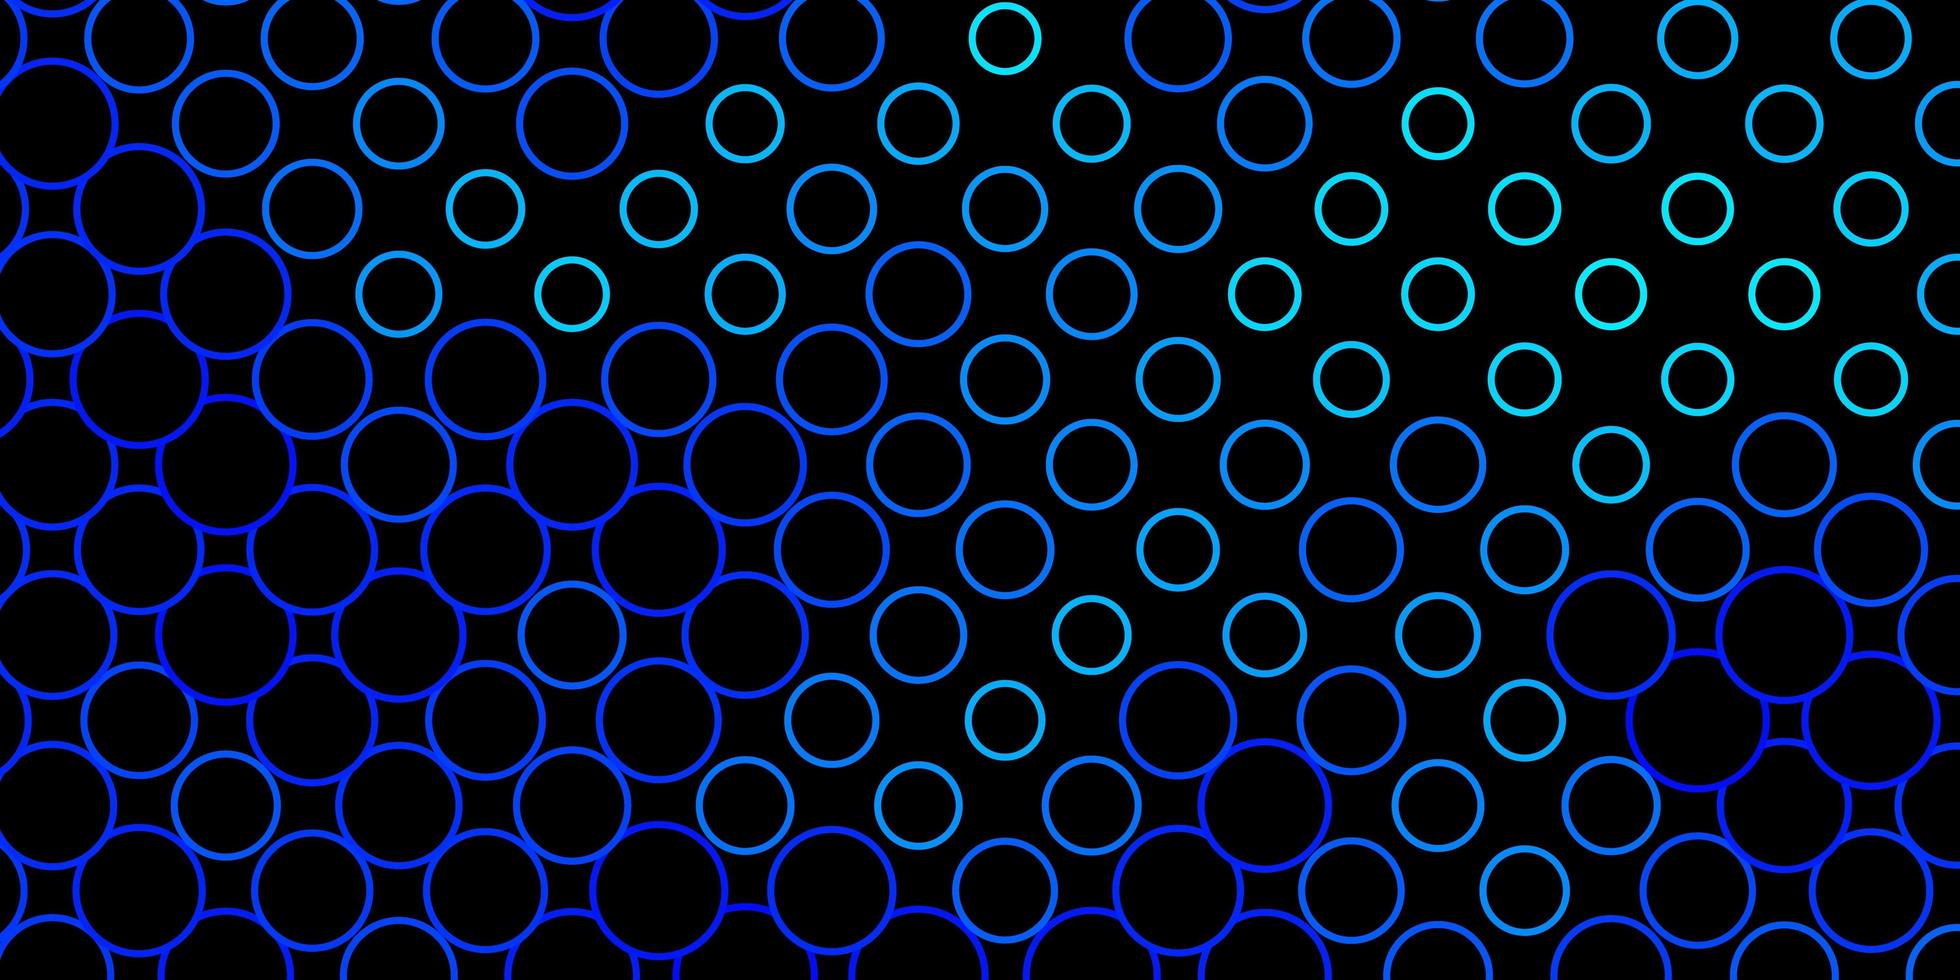 Telón de fondo de vector azul oscuro con círculos. Ilustración colorida con puntos degradados en estilo natural. patrón para fondos de pantalla, cortinas.